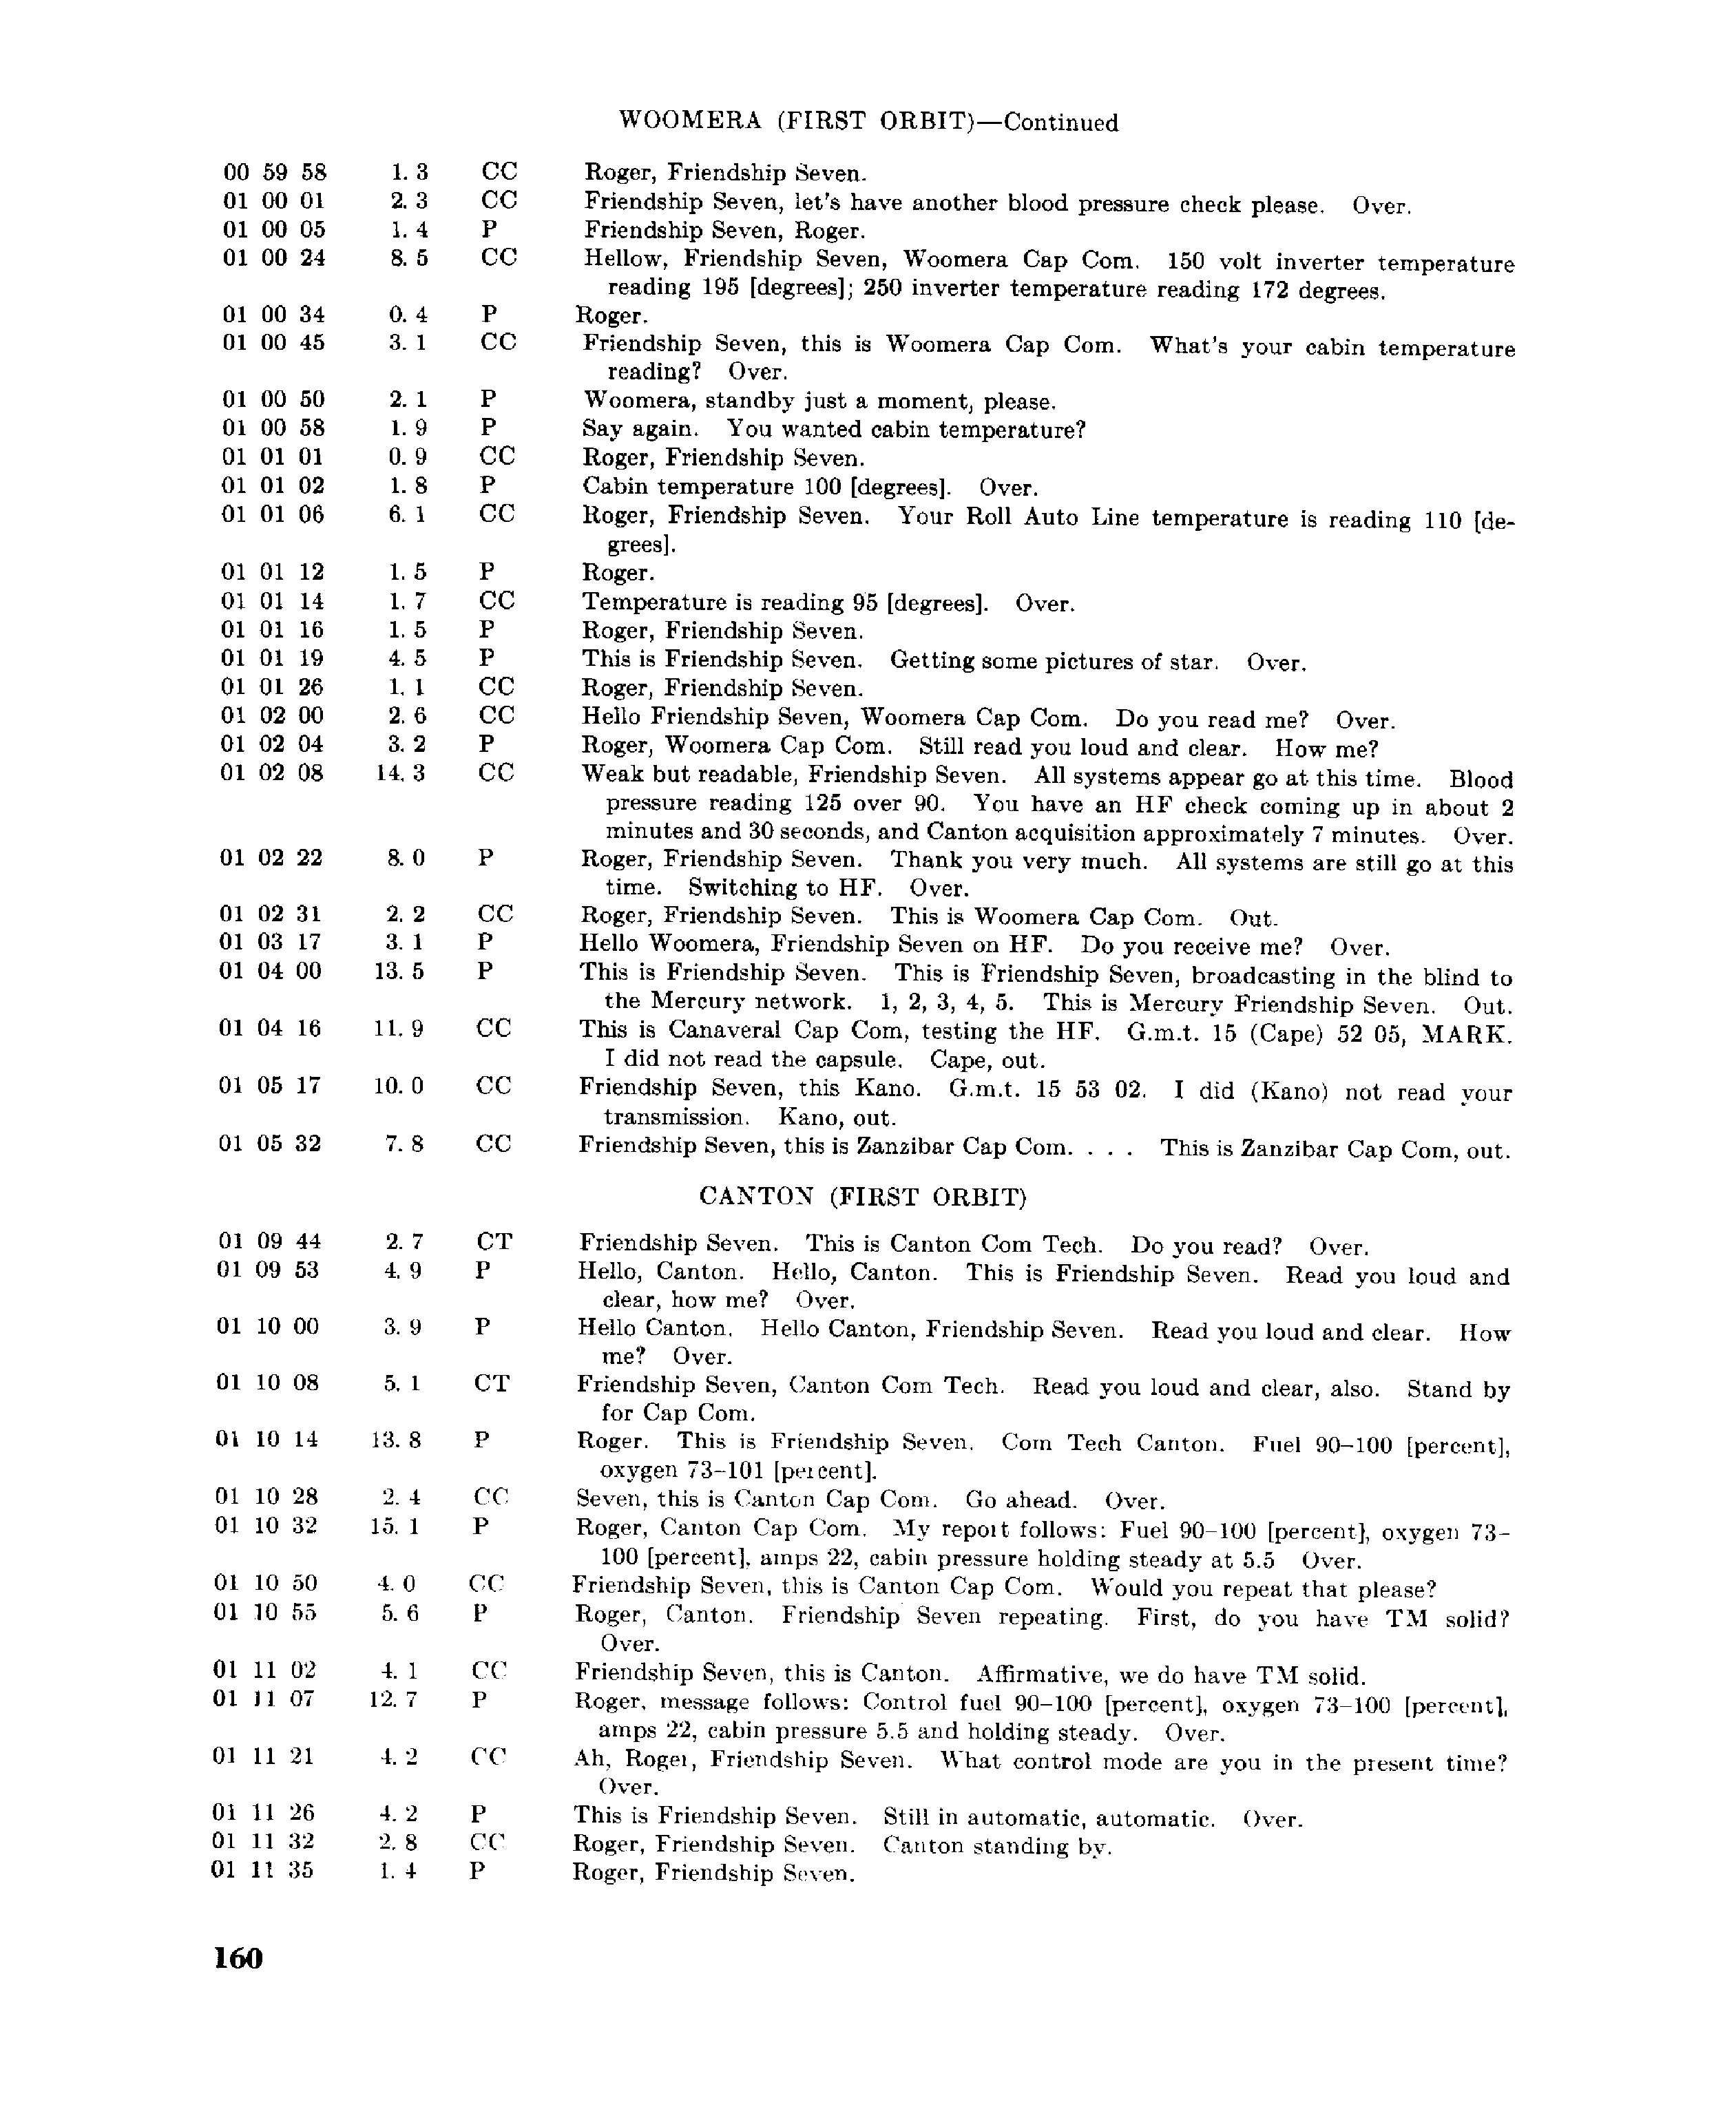 Page 159 of Mercury 6’s original transcript